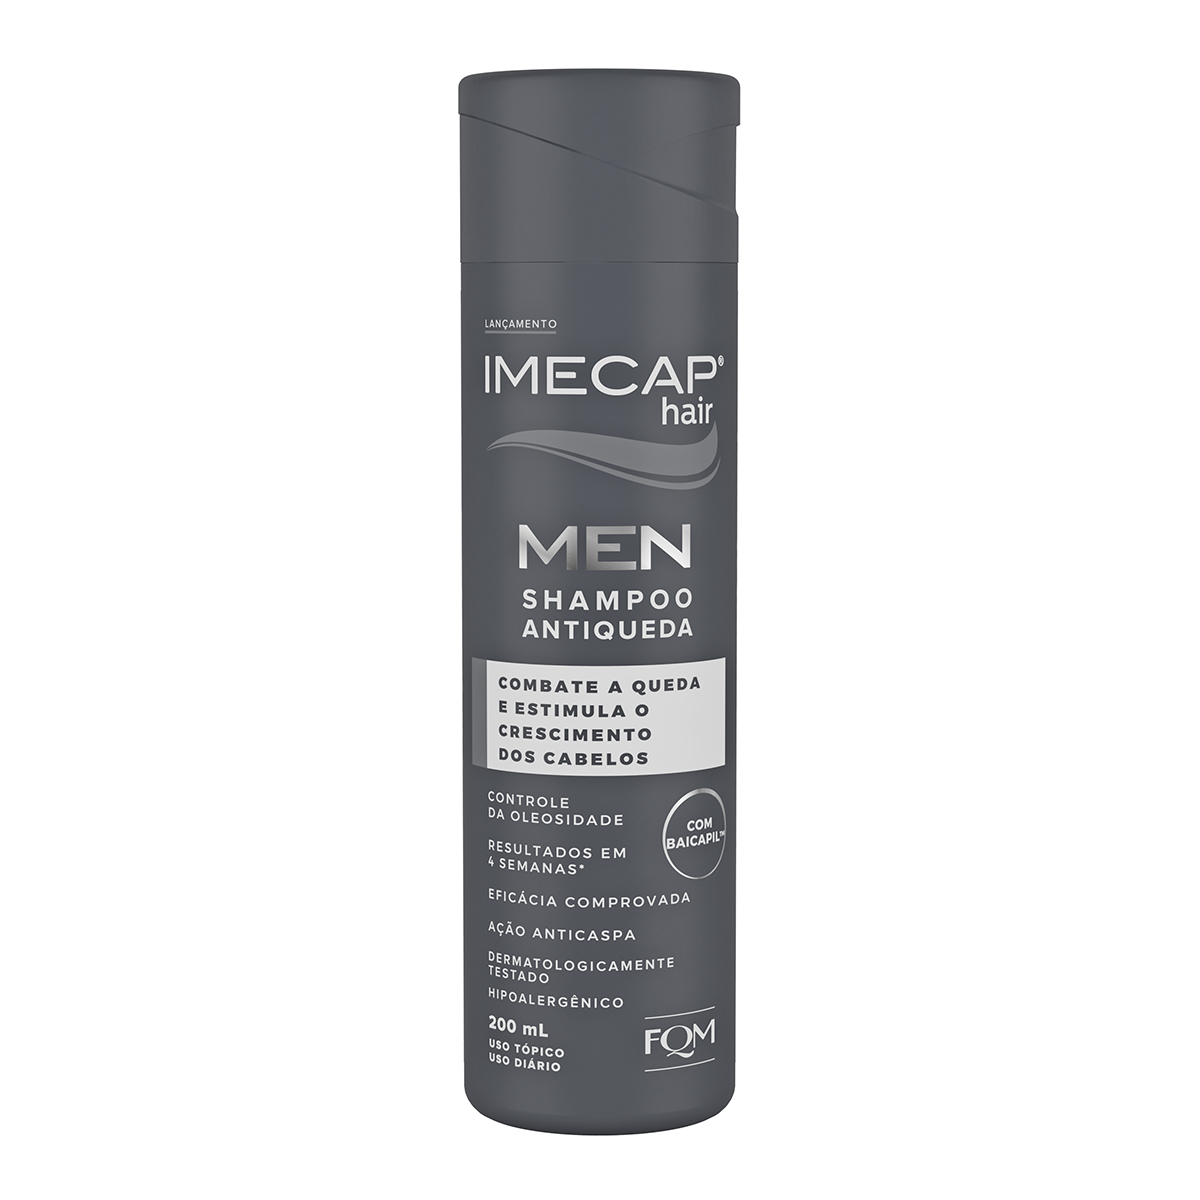 Shampoo Imecap Hair Men Antiqueda 200ml 200ml